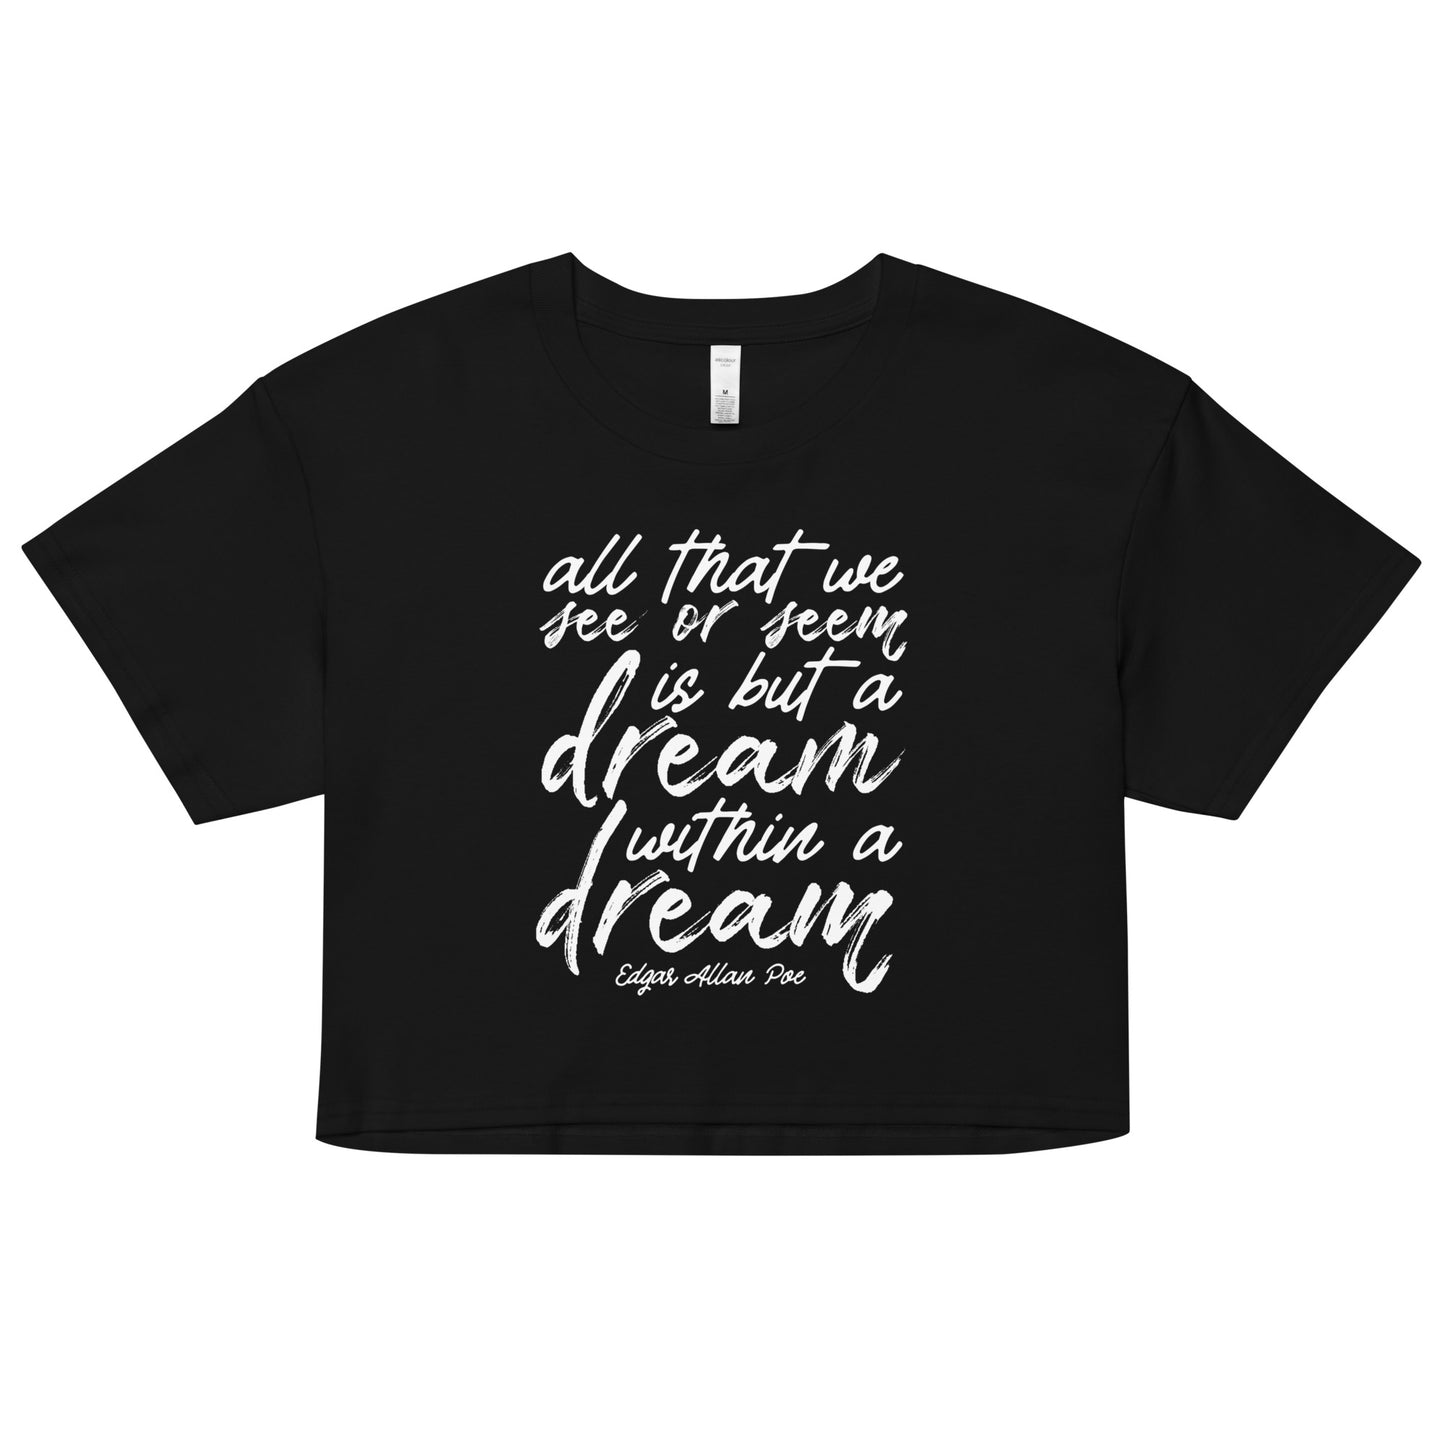 Dream Within a Dream Edgar Allan Poe Quote - Women’s crop top - Black Front